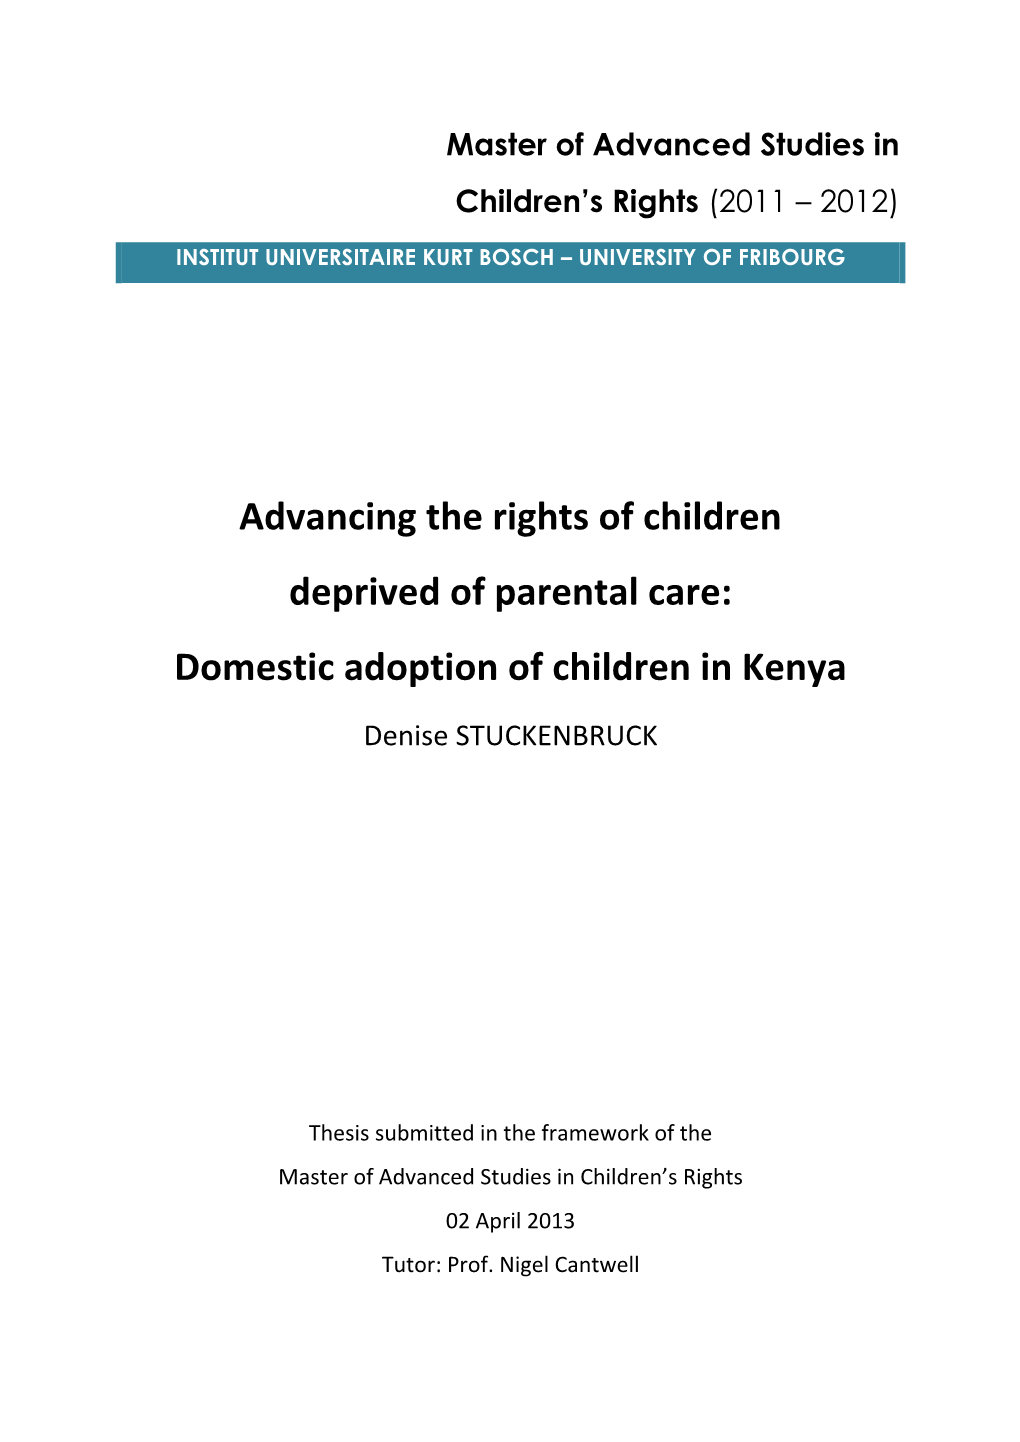 Domestic Adoption of Children in Kenya